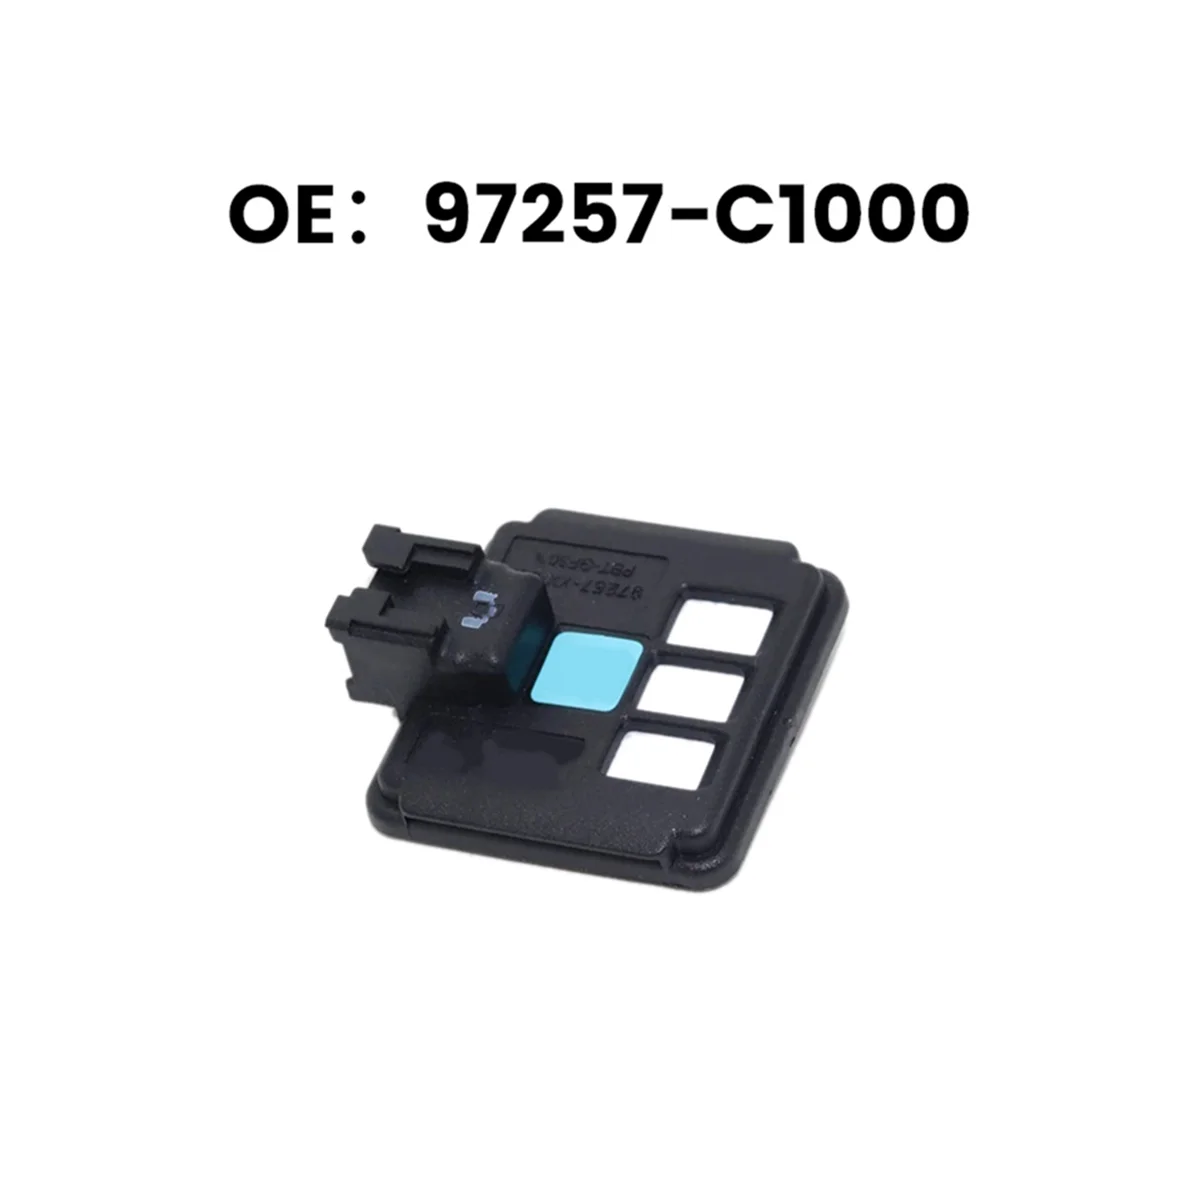 

New Windshield Auto Defog Sensor for Creta IX25 Elantra AD Sonata LF 15-16 97257-C1000